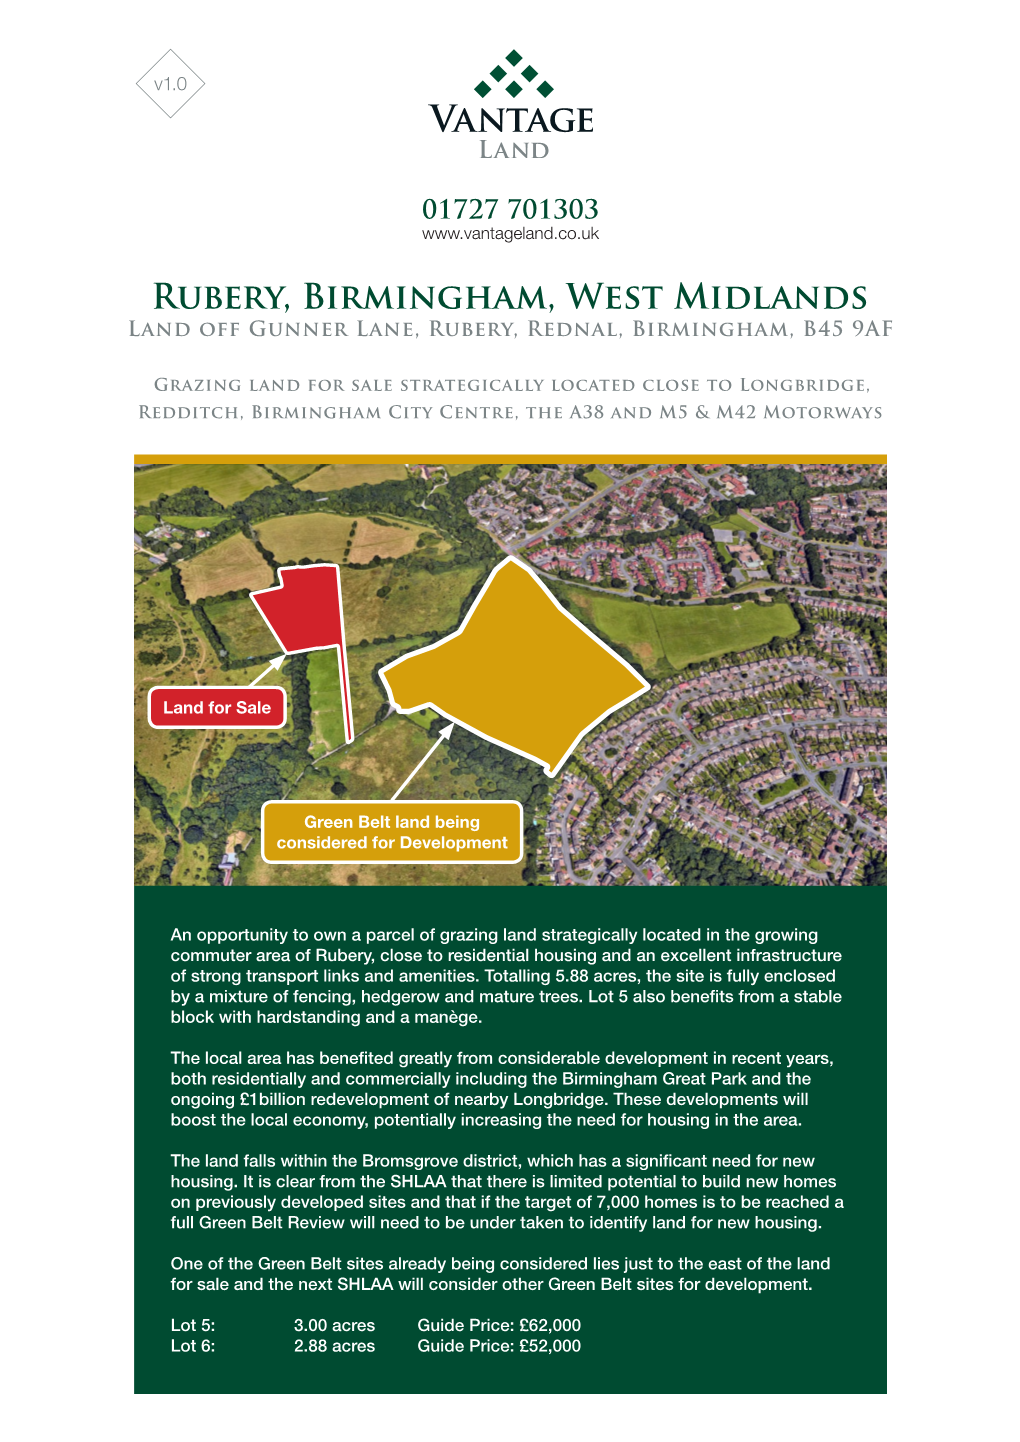 Rubery, Birmingham, West Midlands Land Off Gunner Lane, Rubery, Rednal, Birmingham, B45 9AF